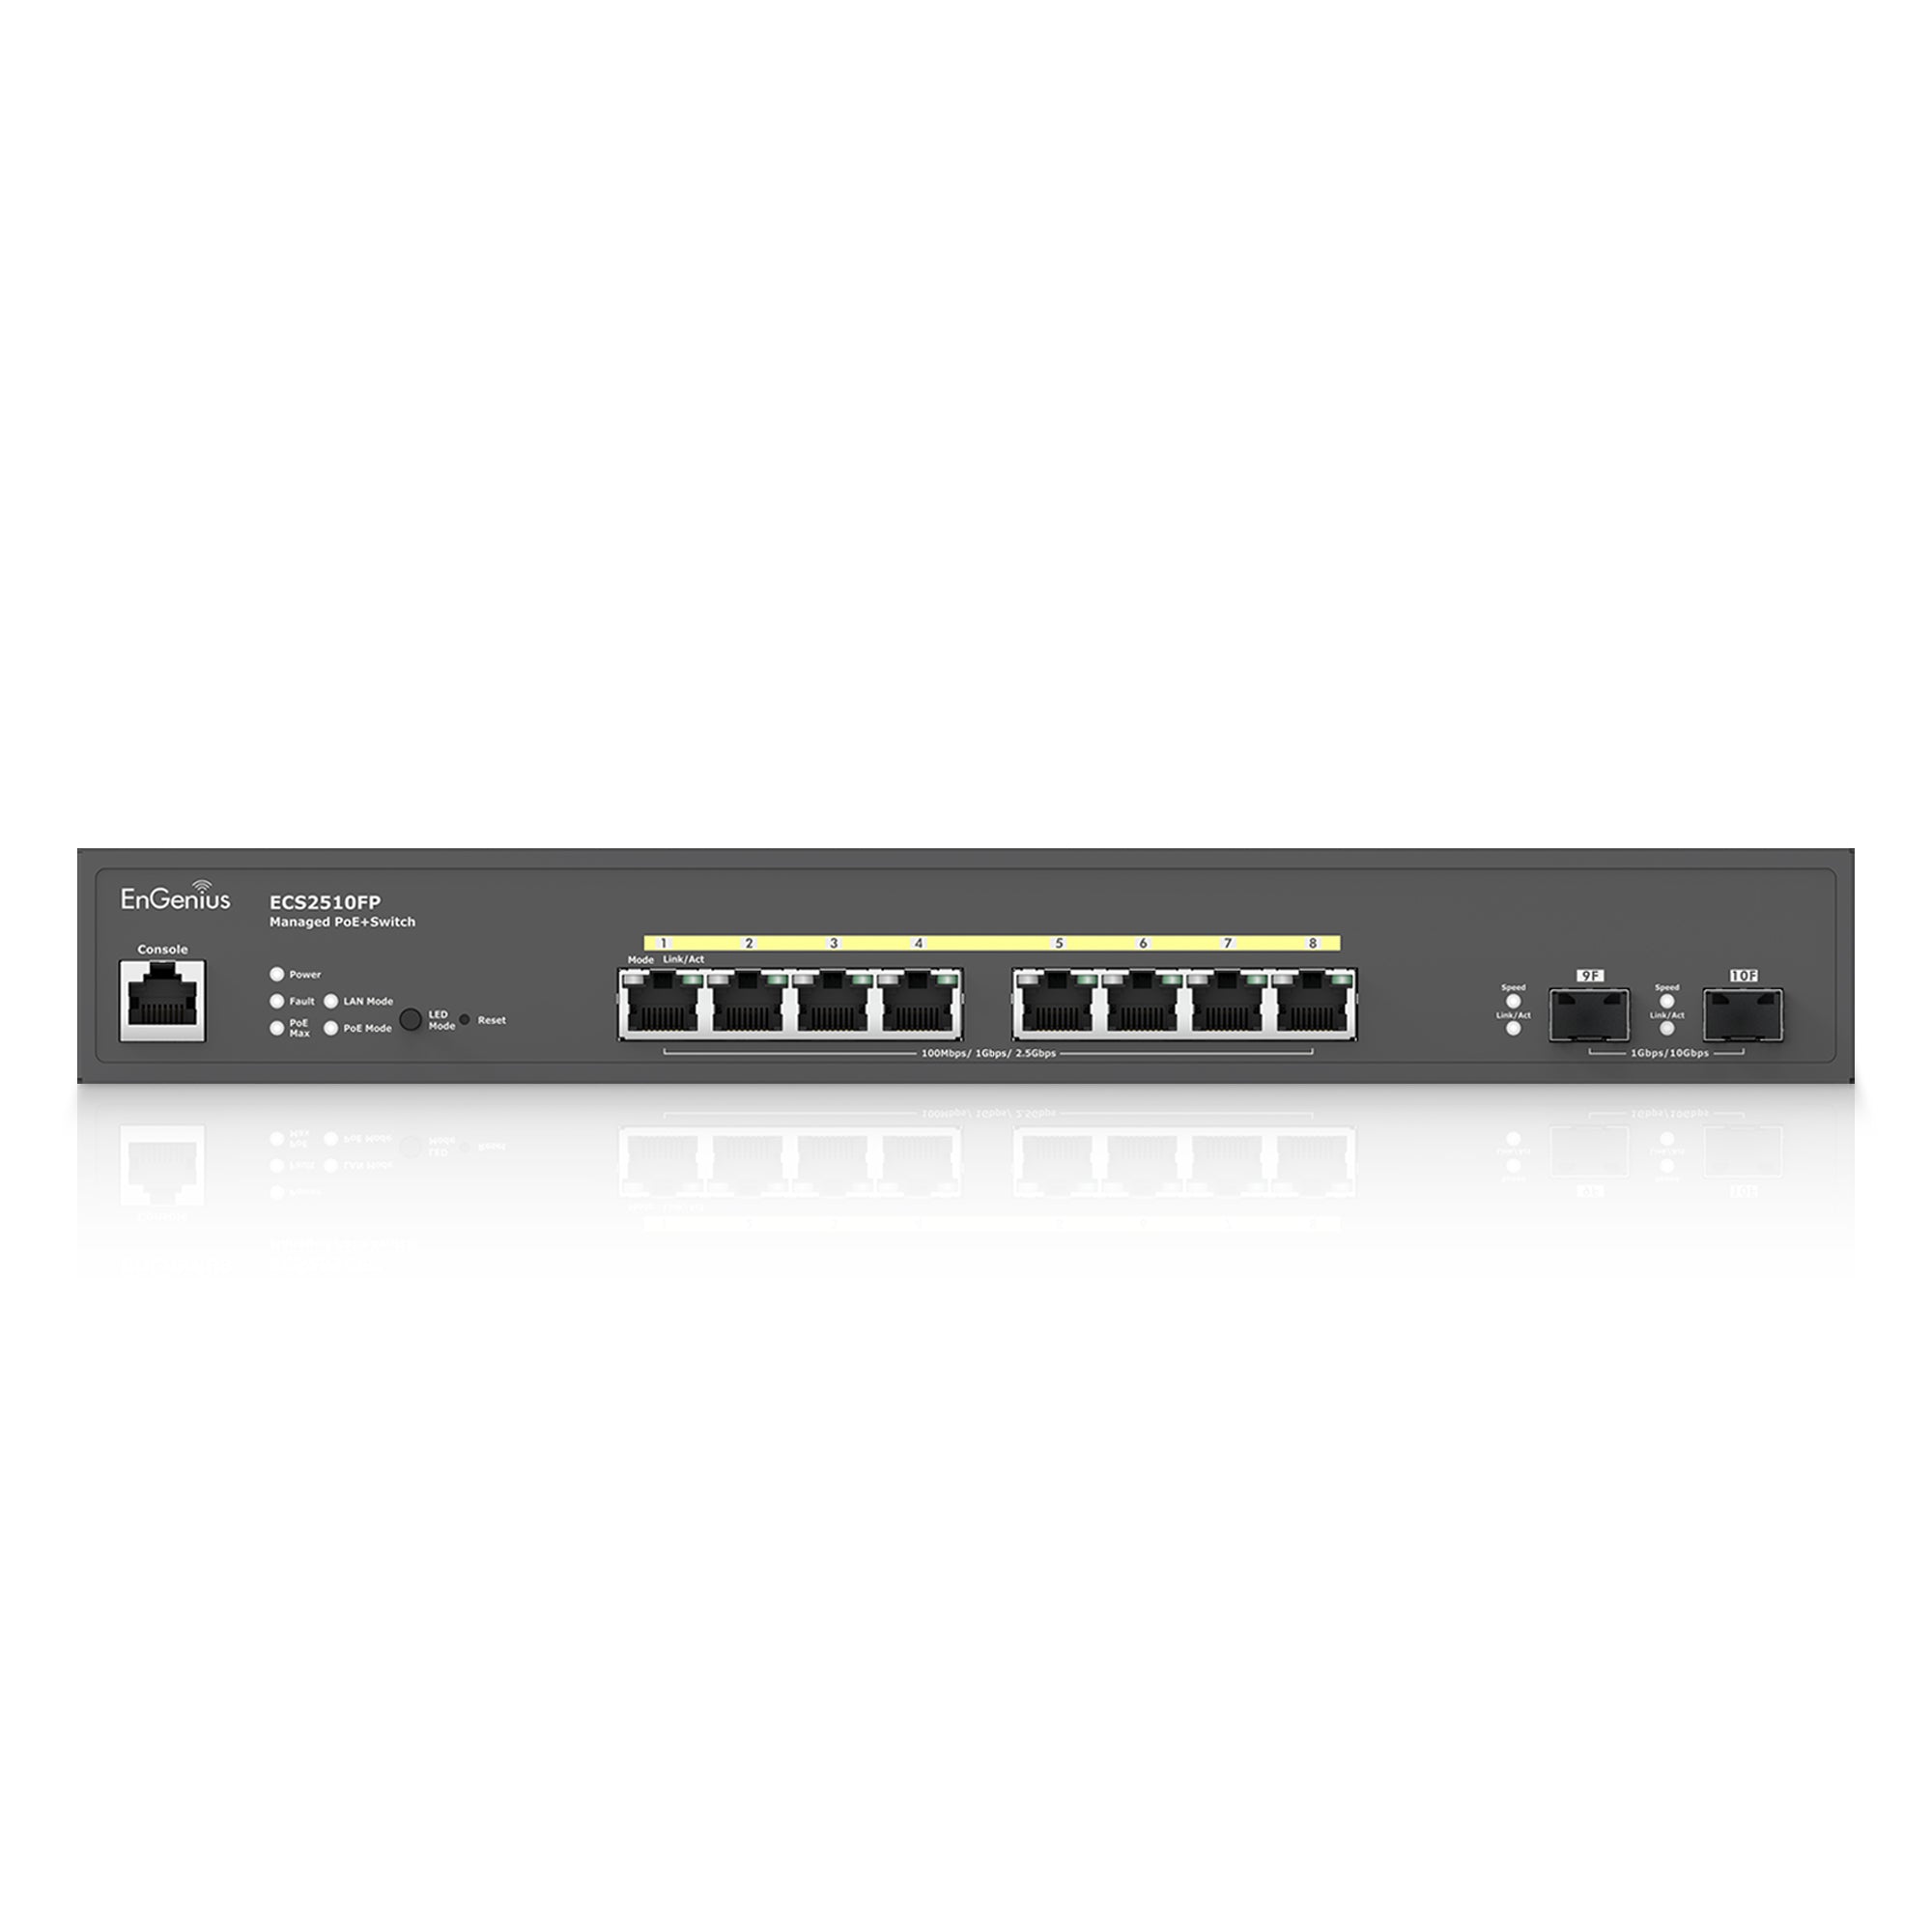 ECS2510FP: Cloud Managed 8 Port Switch 240W PoE+ Multi-Gigabit 2.5 Gb w/ 2 SFP+ Uplink Ports